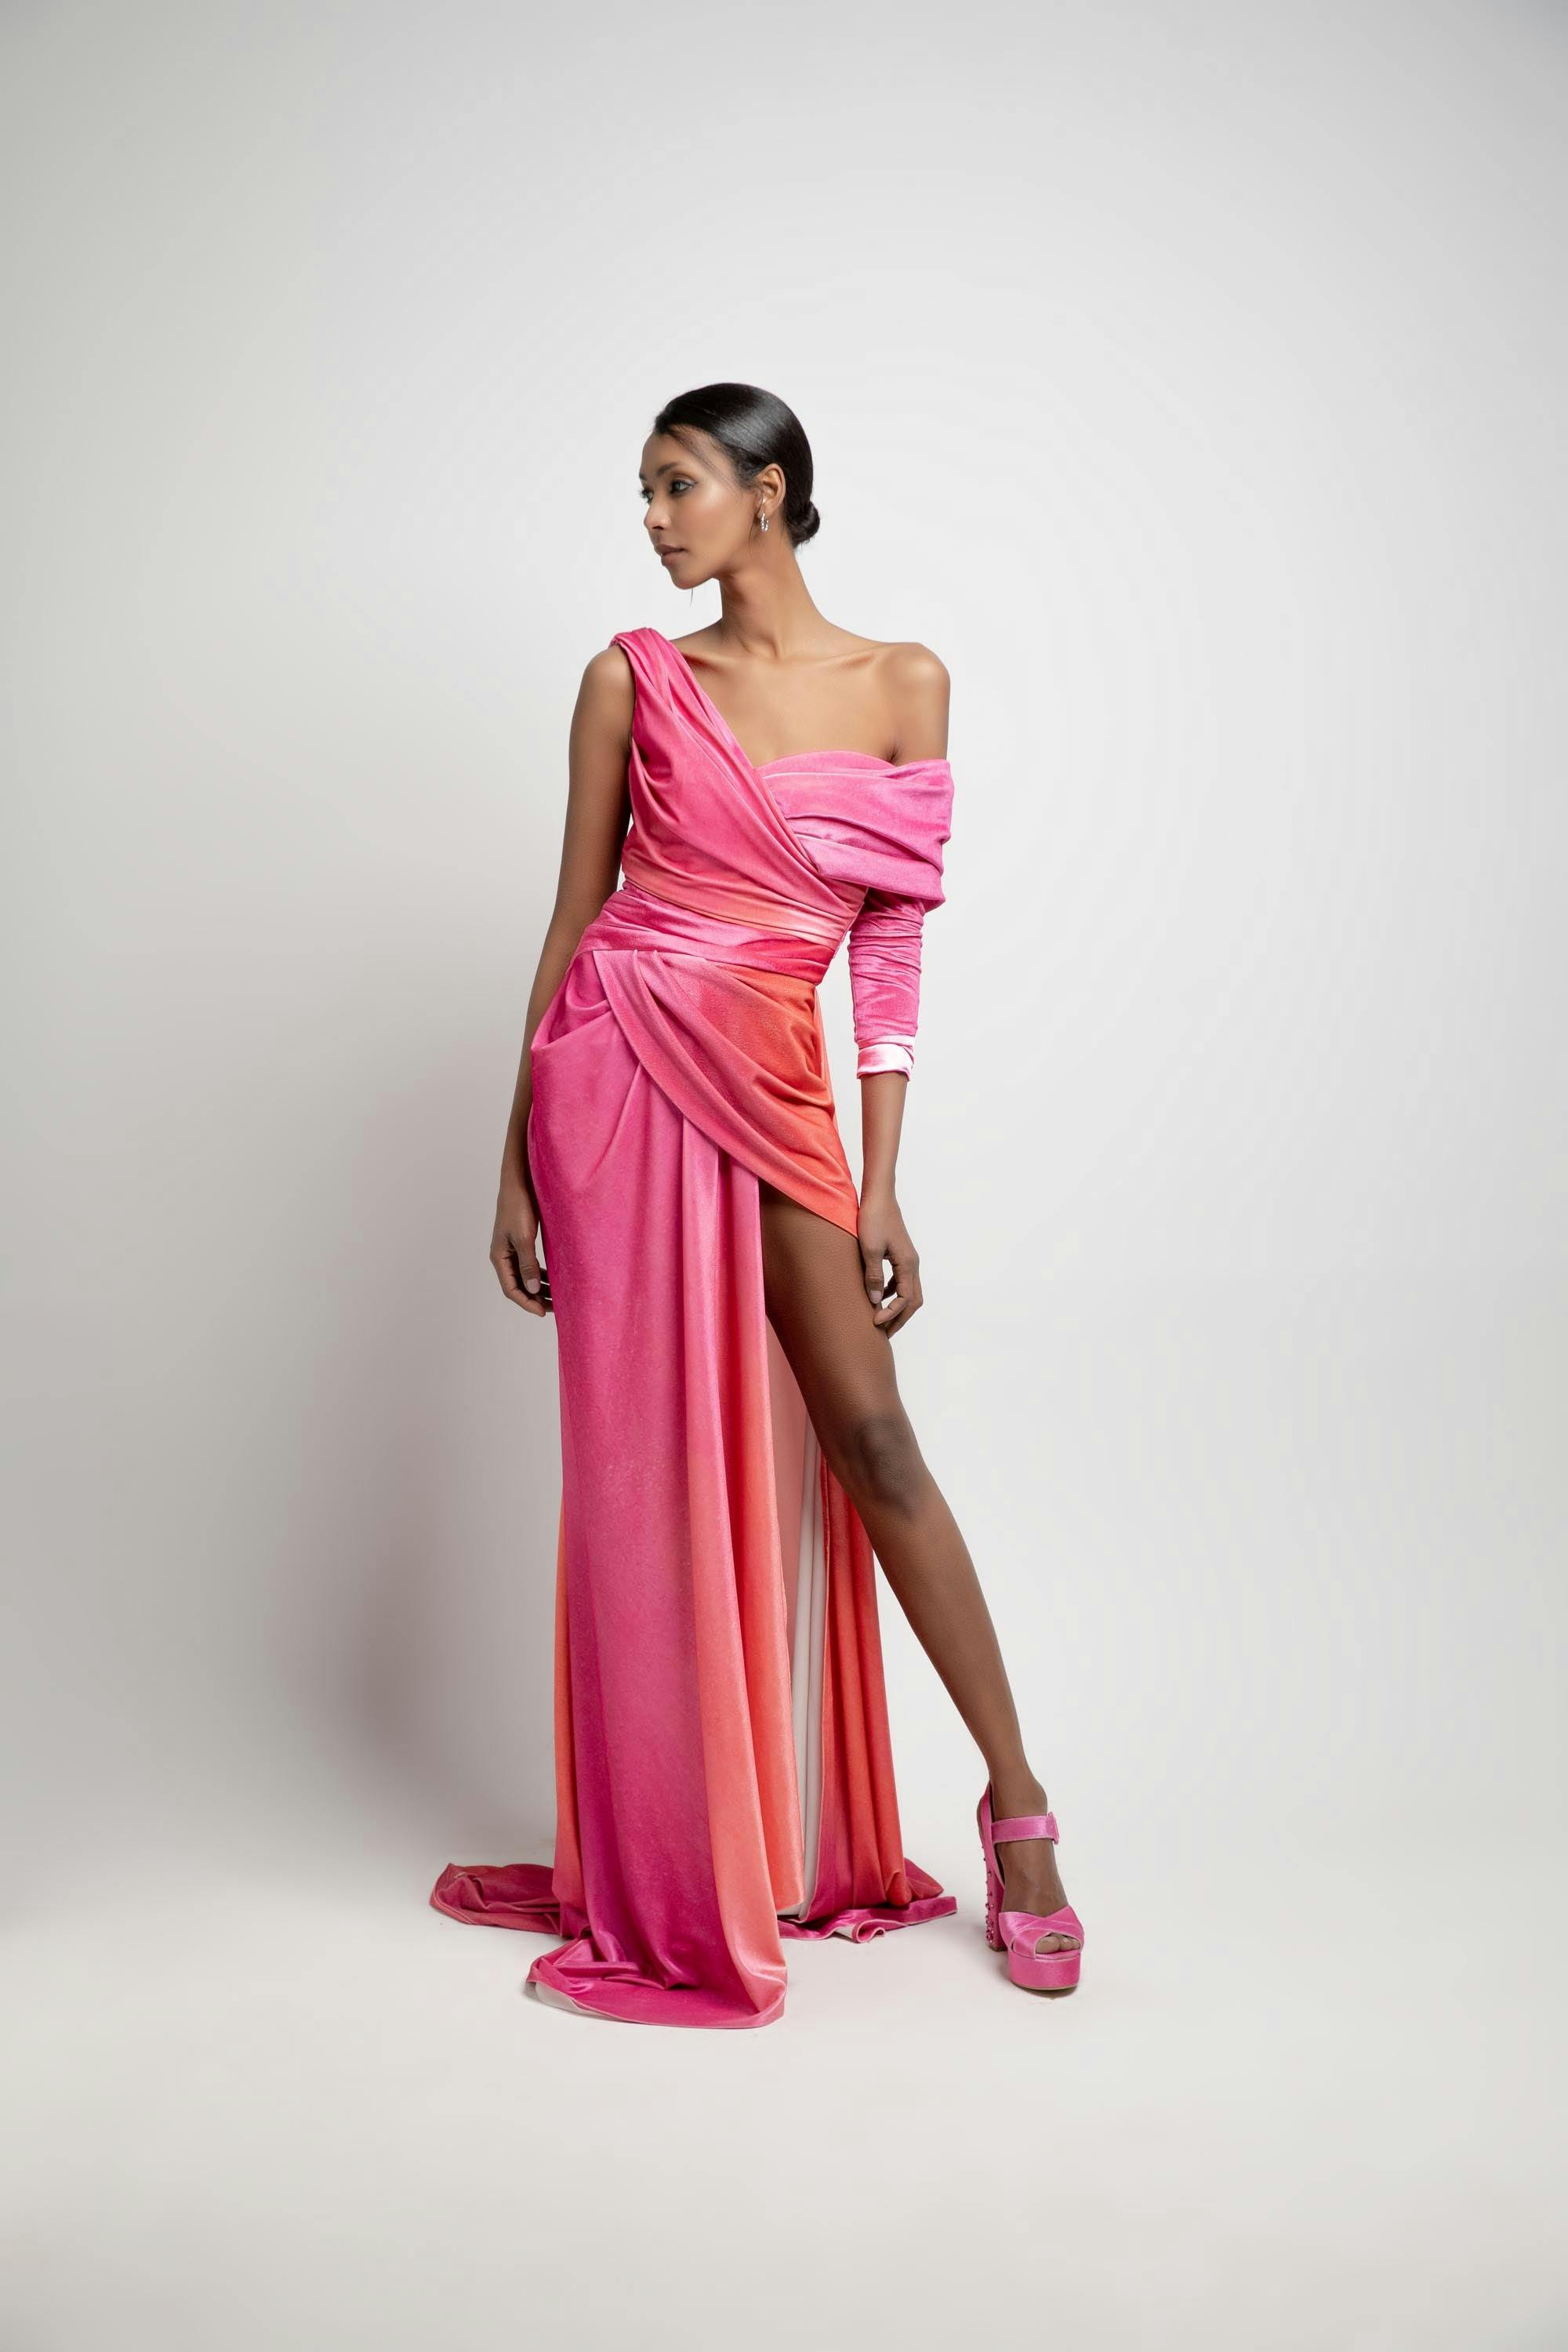 Look 18 - Jean fares couture - JFC- one shoulder split pink dress